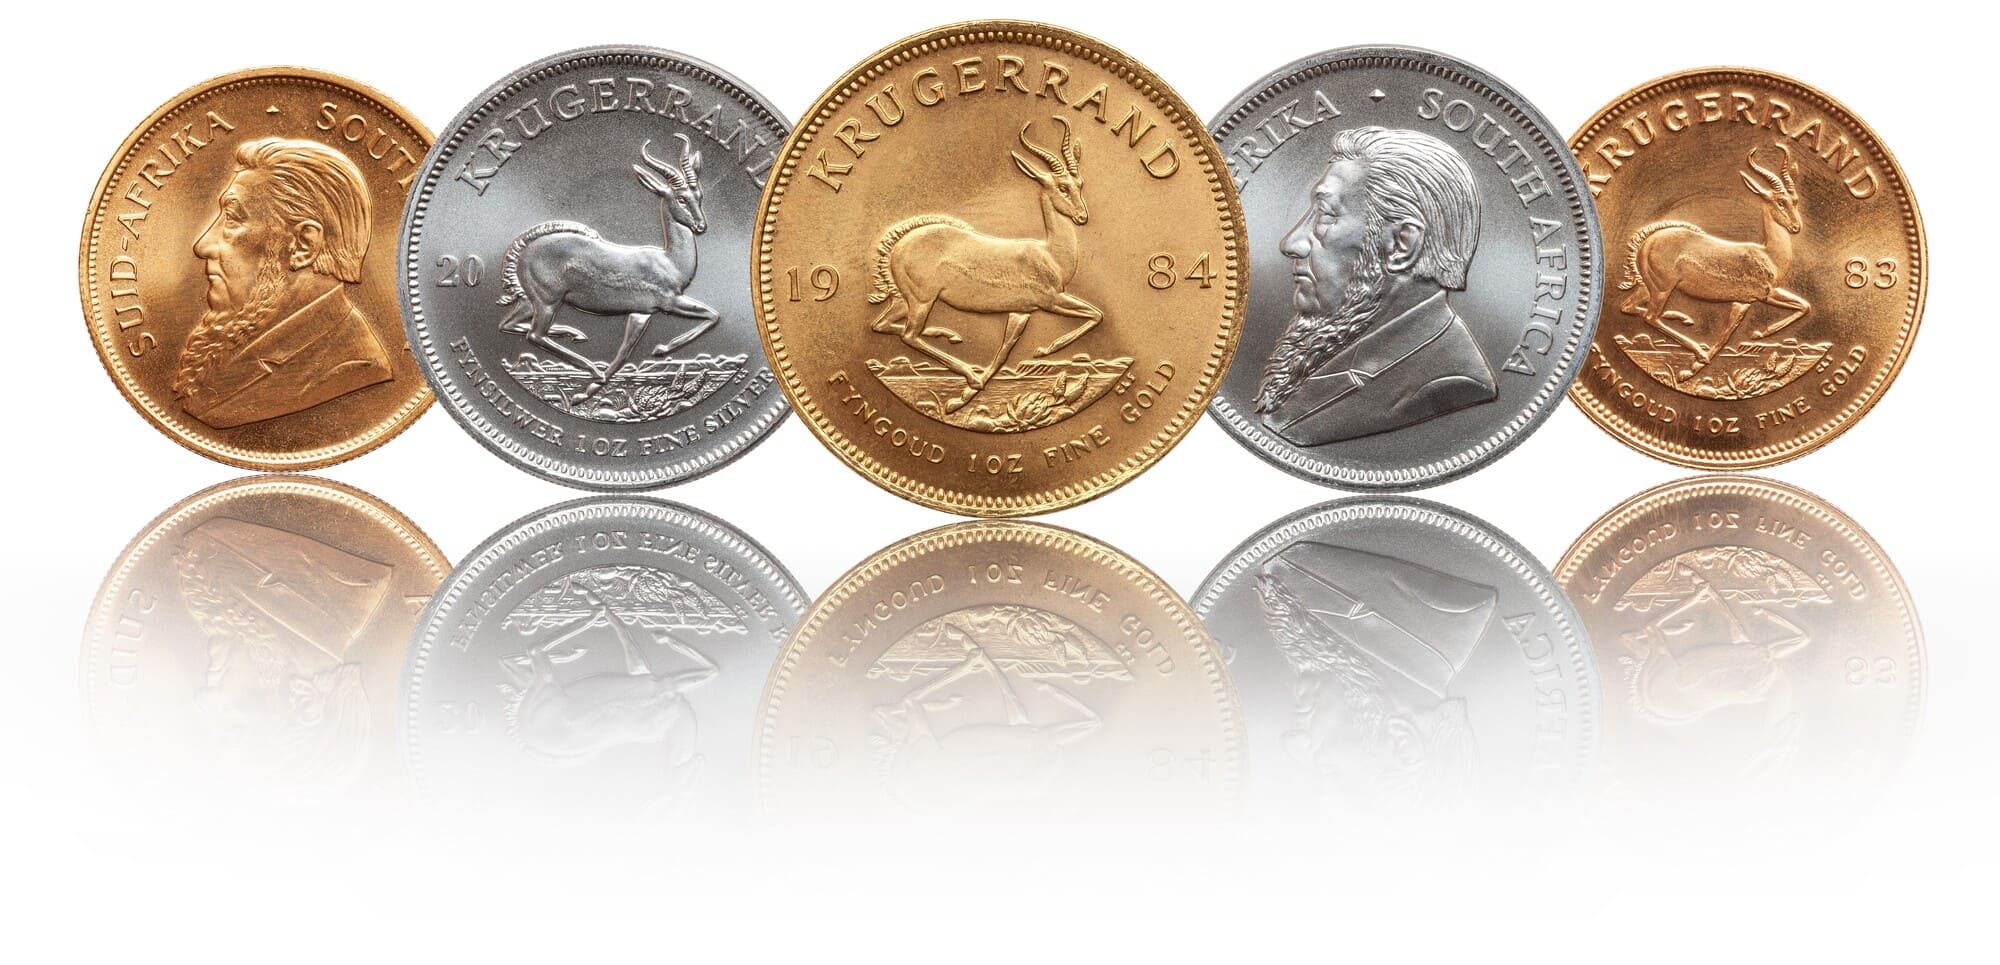 Image of silver and gold Krugerrands